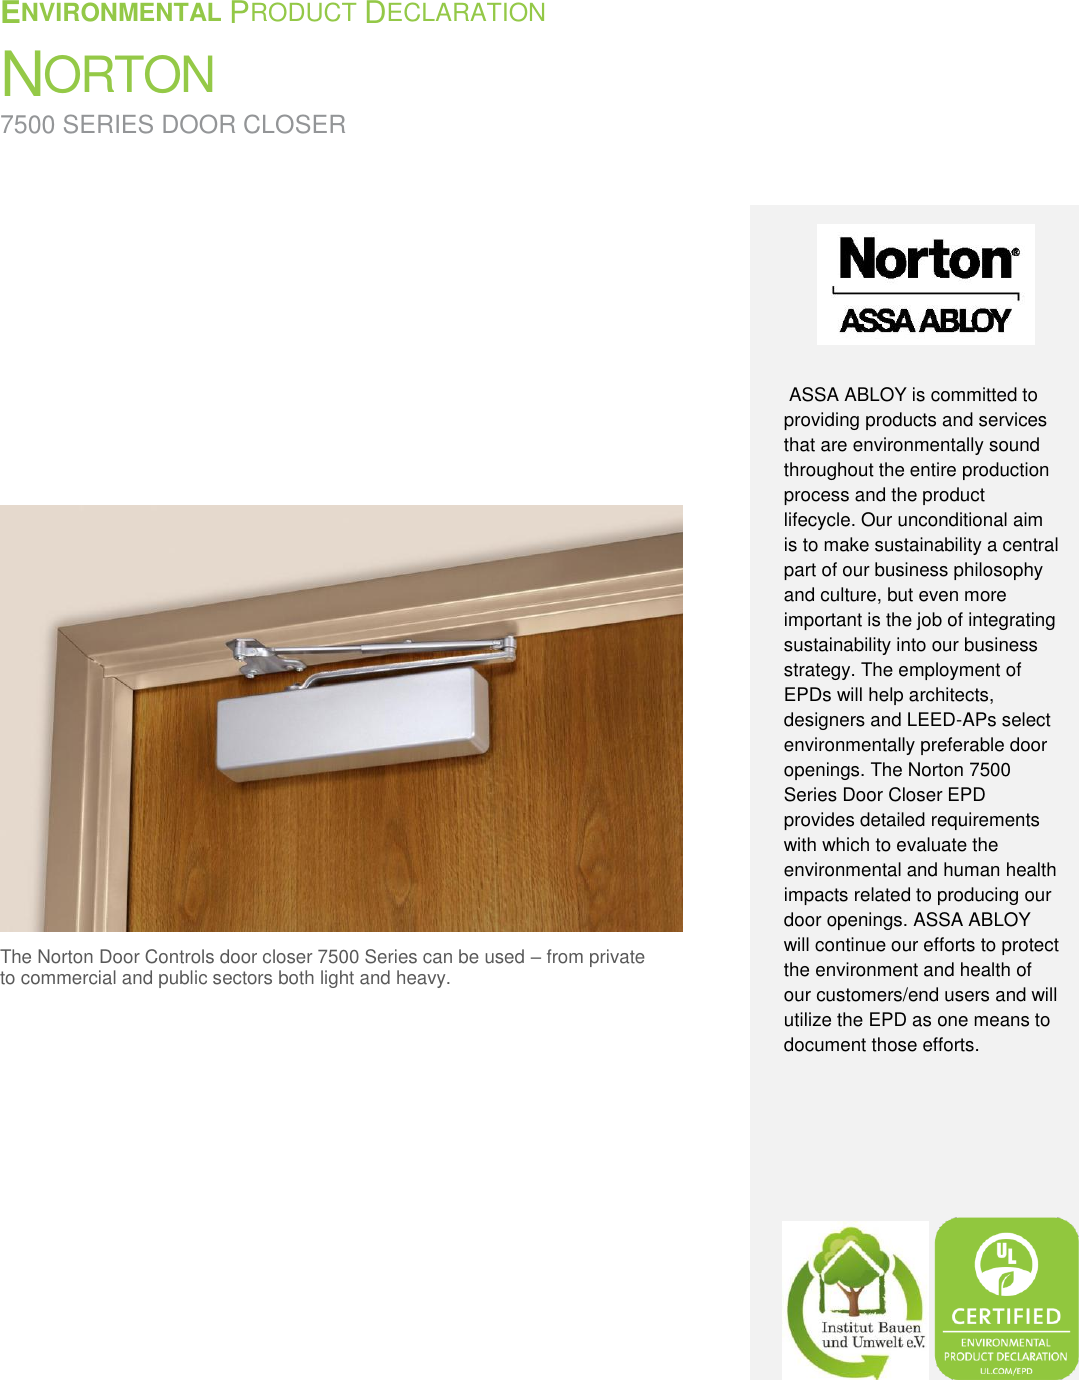 Norton 7500 Series Door Closer Environmental Product Declaration (EPD